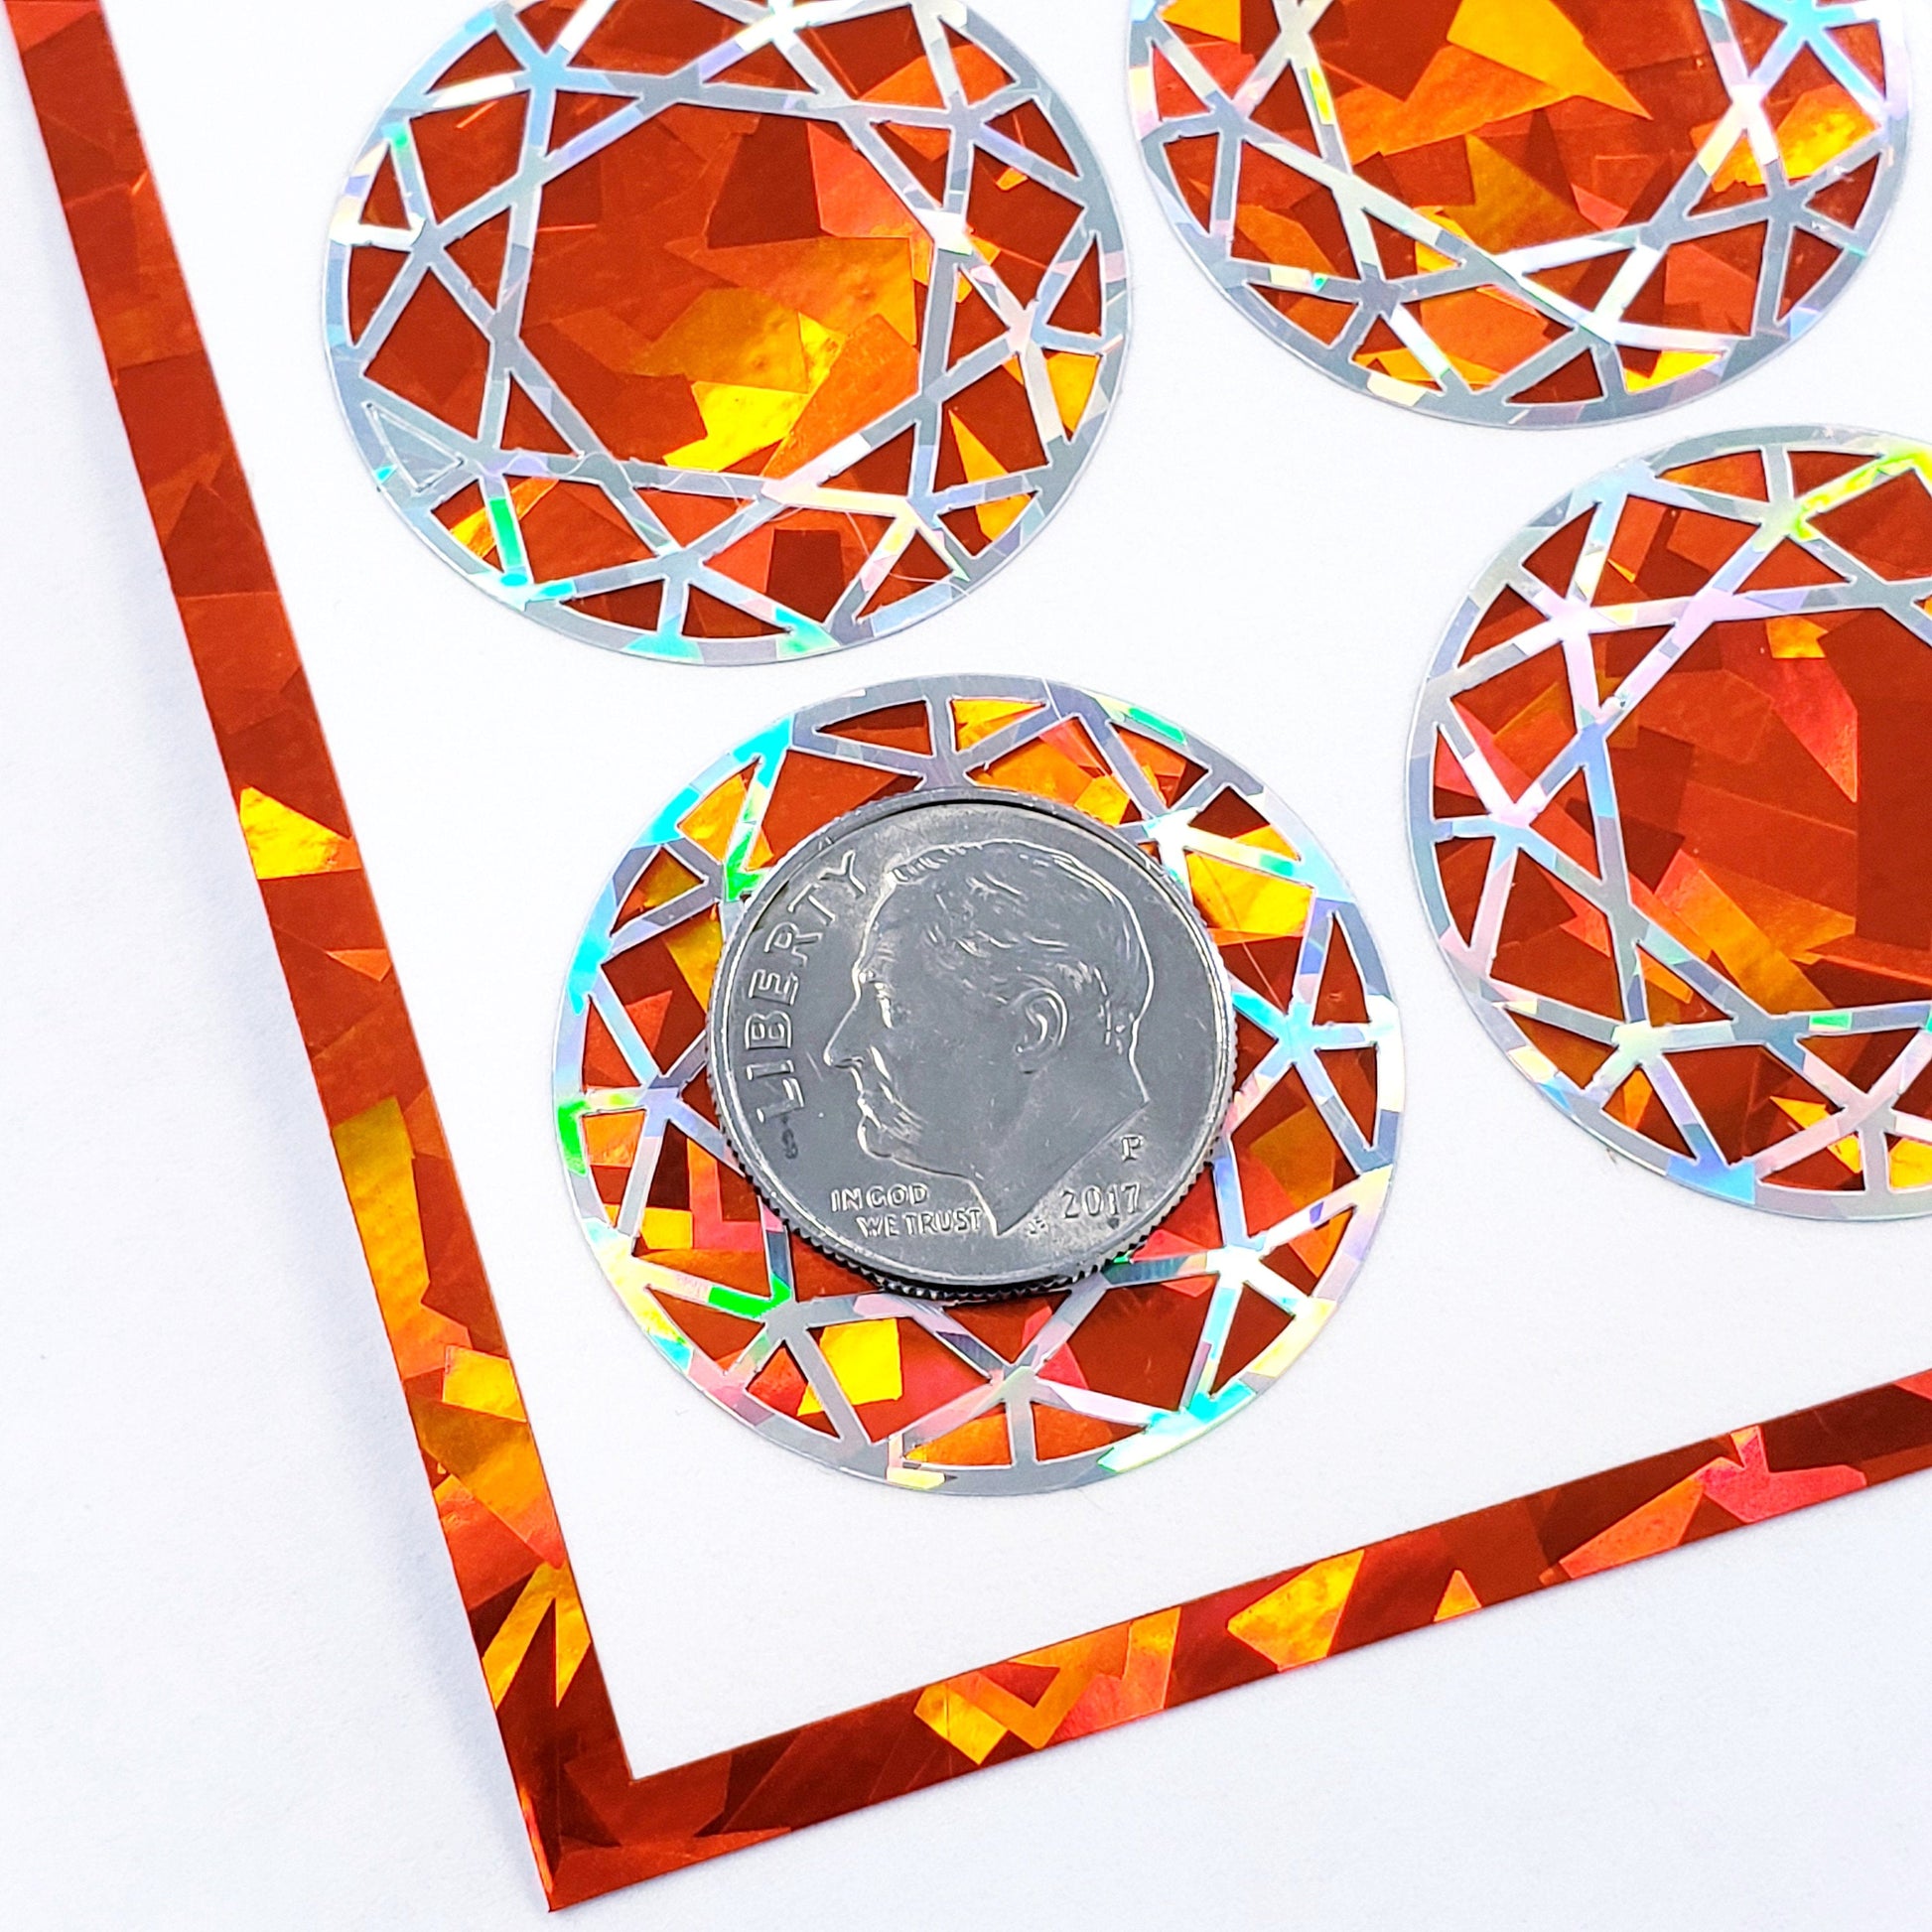 Orange Birthstone stickers, set of 20 small sparkly round orange gemstone decals for gifts, notecards, journals, phone grips and scrapbooks